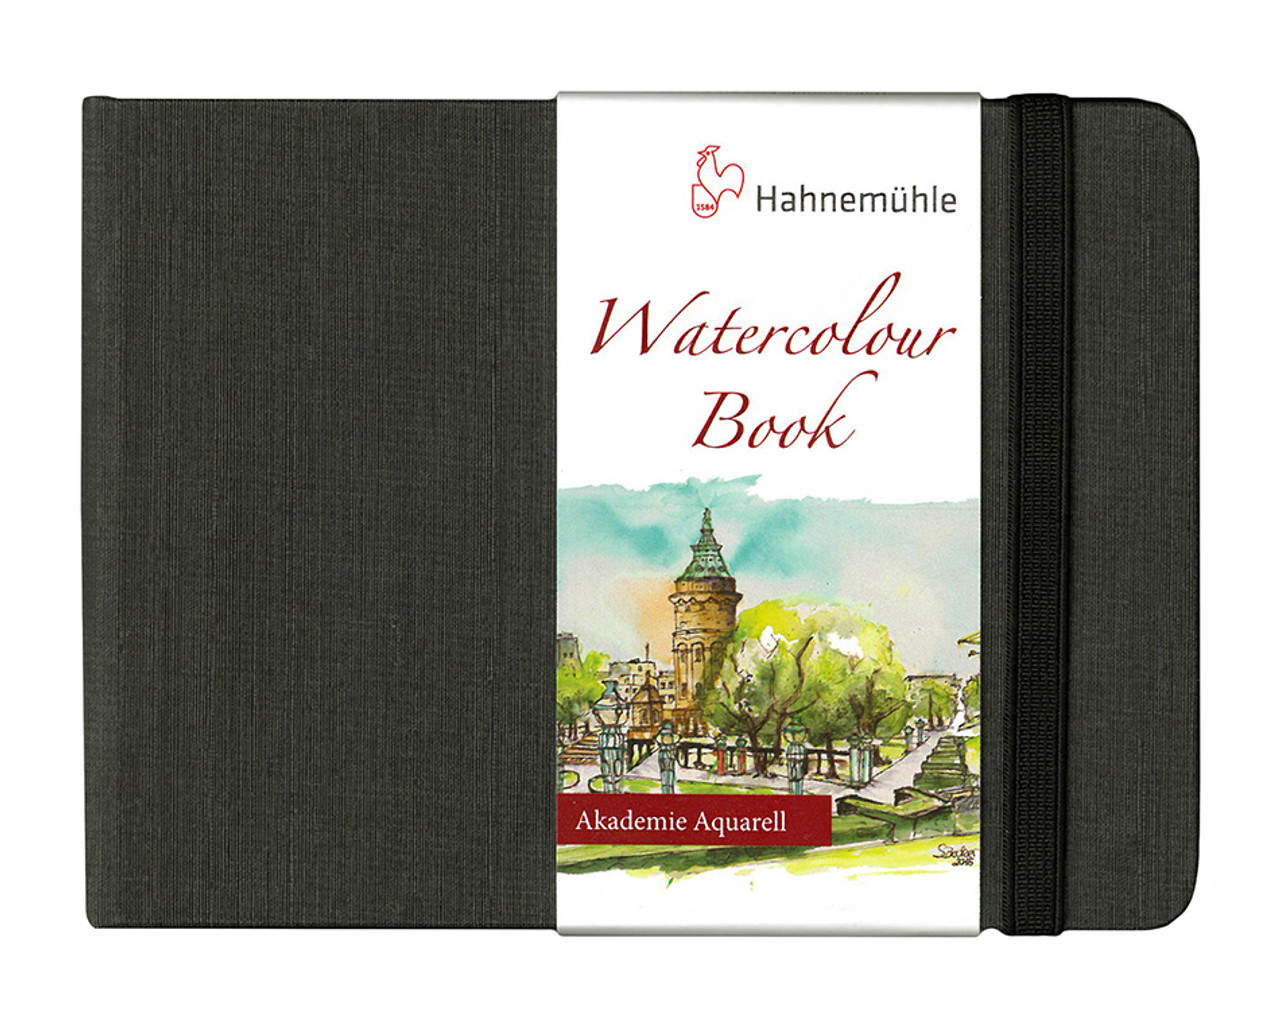 Hahnemuhle Watercolor Book A5 Landscape